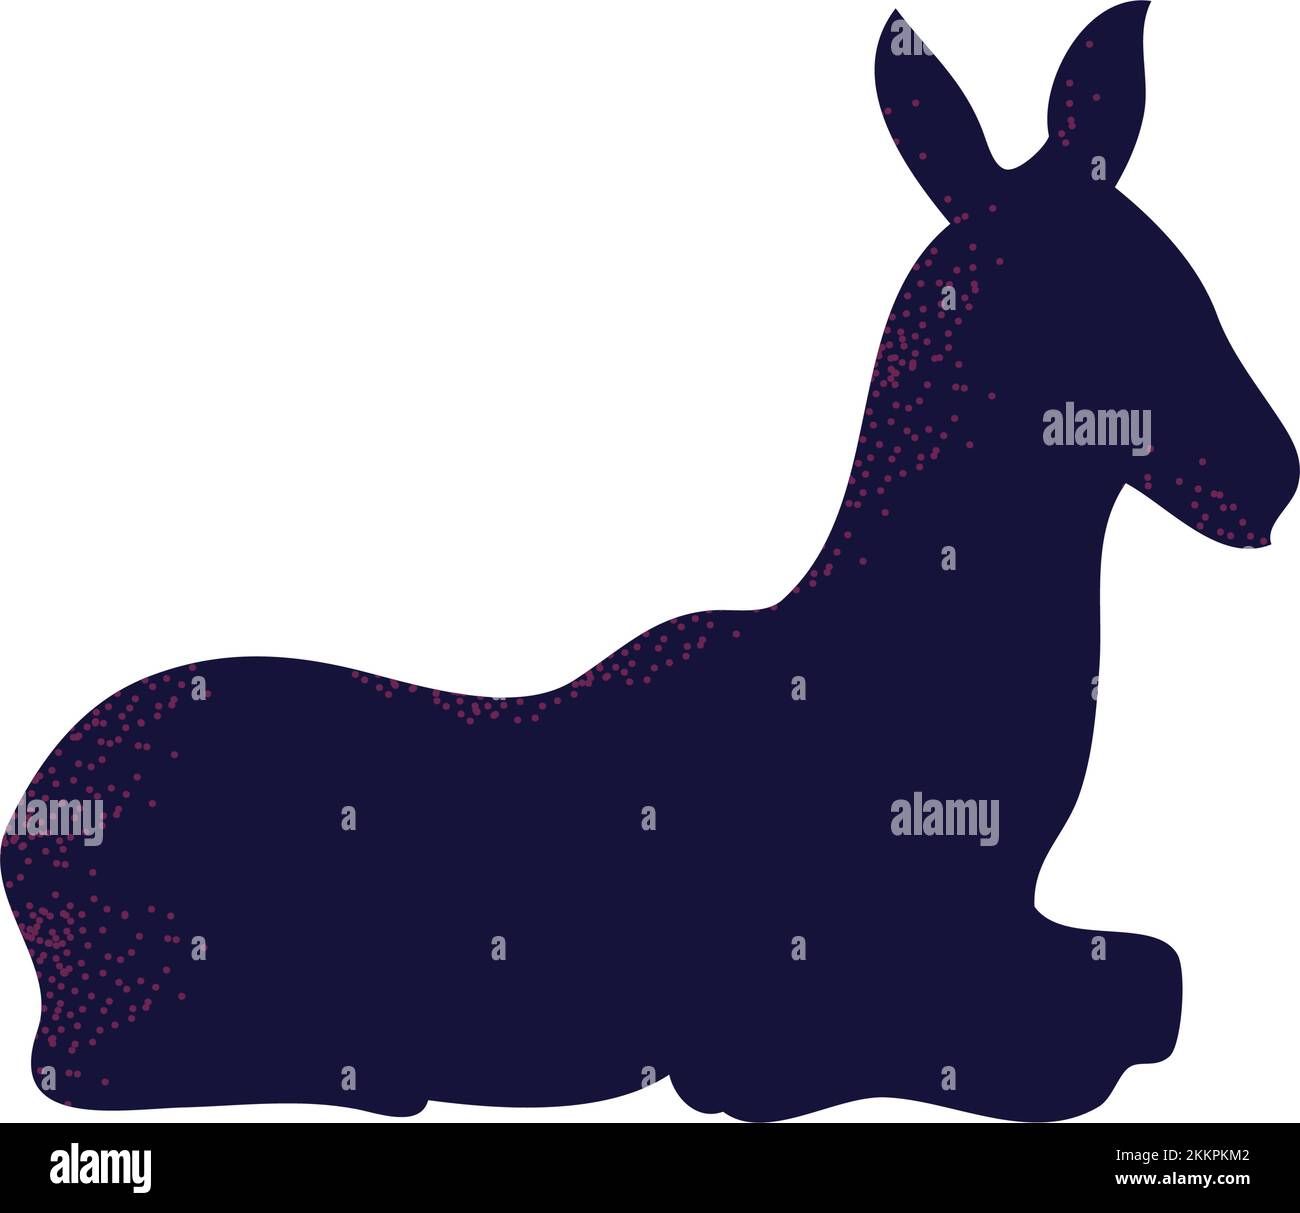 donkey silhouette design Stock Vector